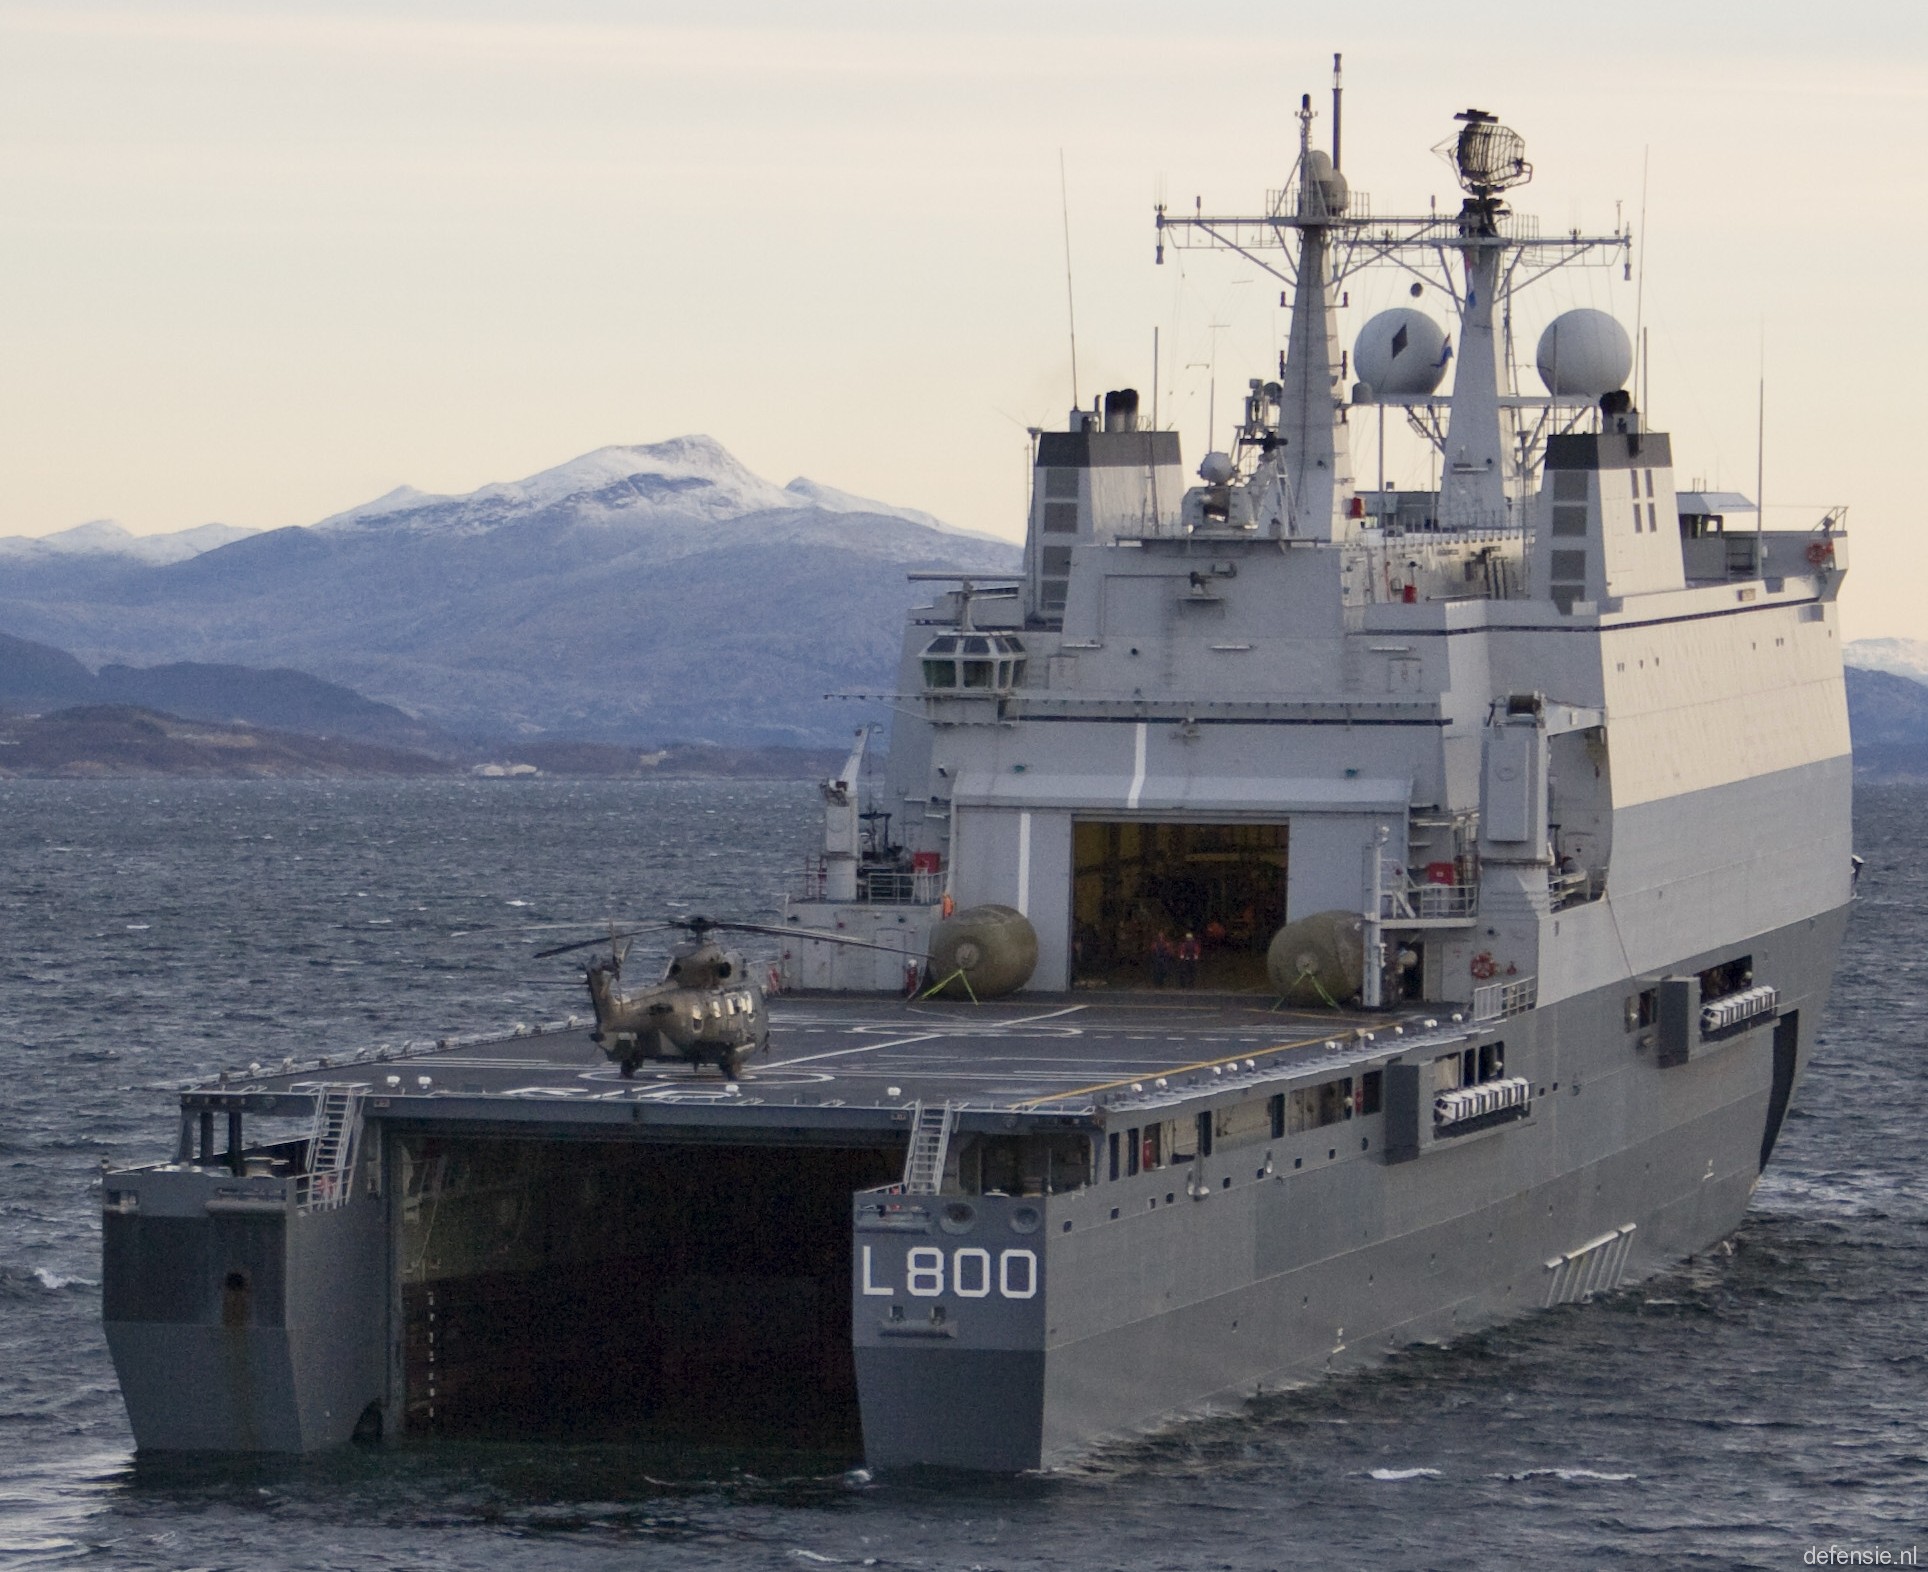 l-800 hnlms rotterdam amphibious landing ship dock lpd royal netherlands navy 17